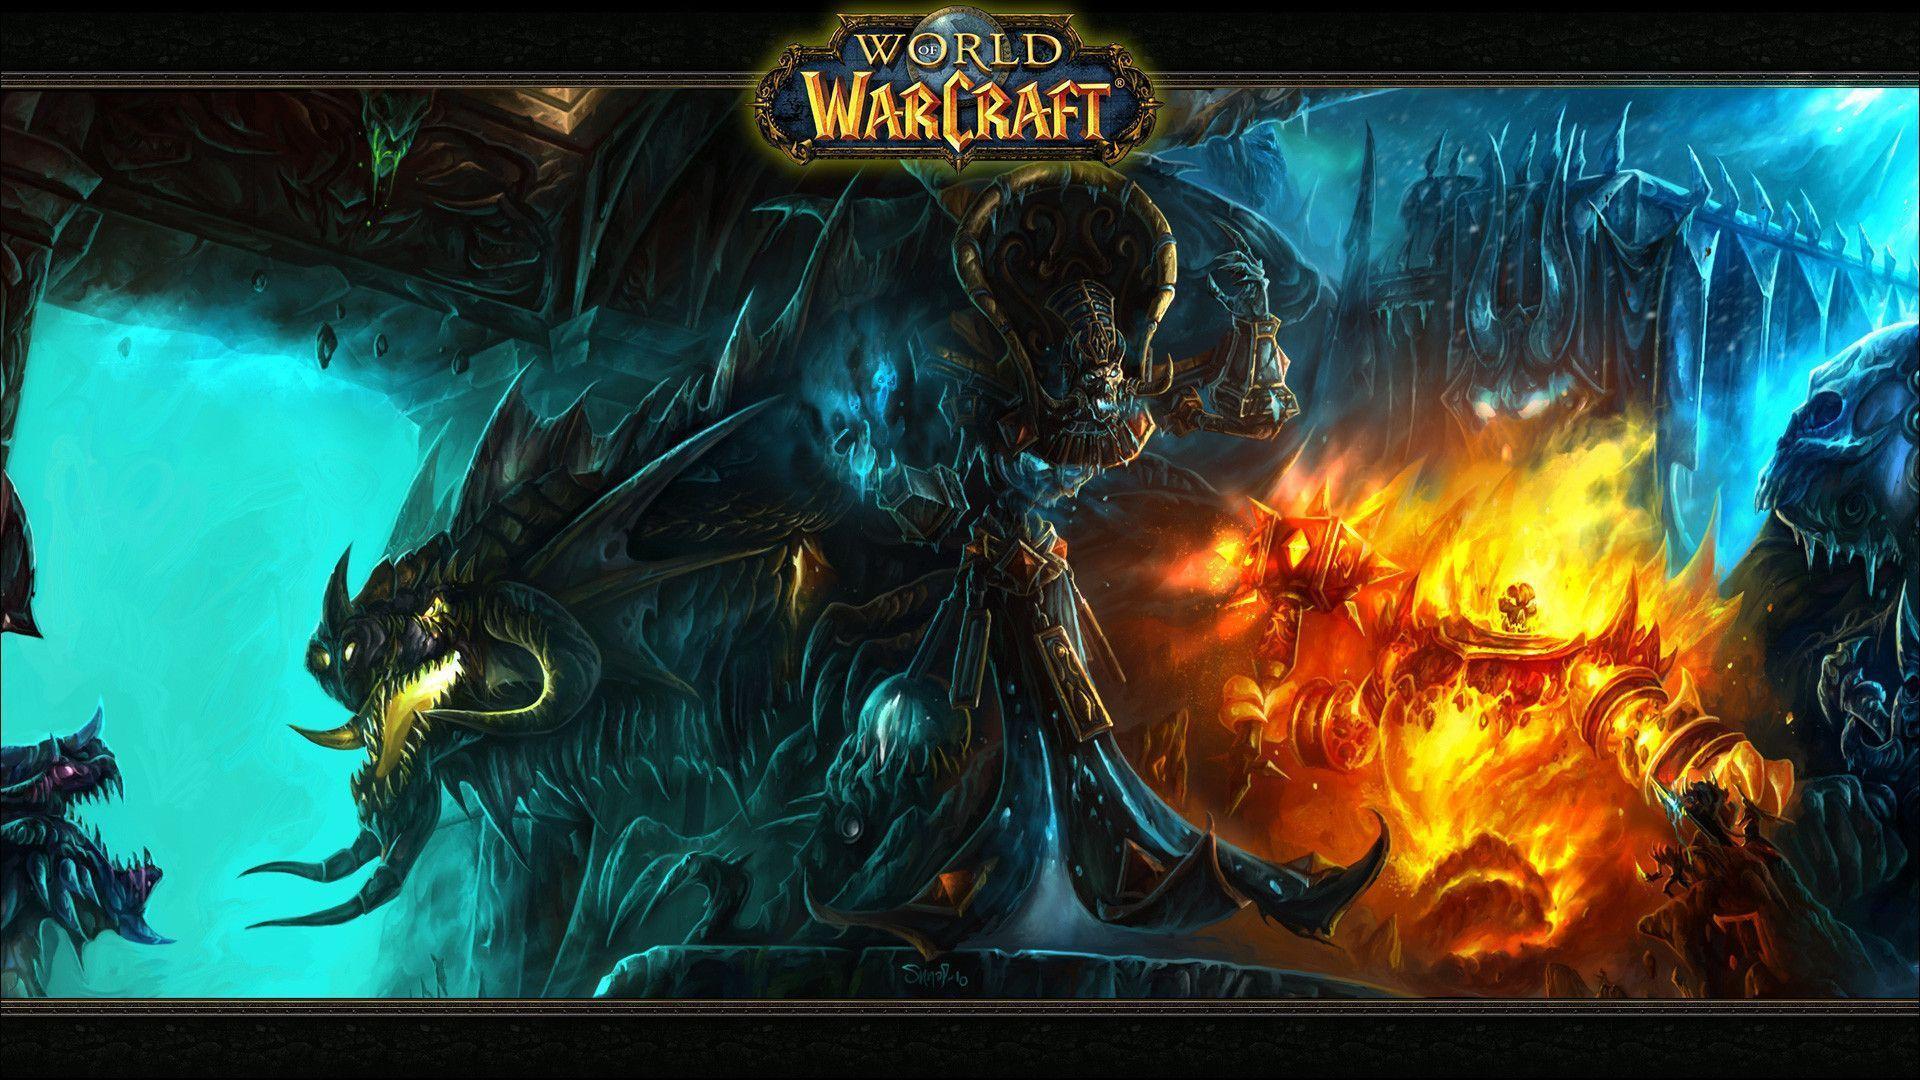 World of Warcraft Wallpaper 1 252399 Image HD Wallpaper. Wallfoy